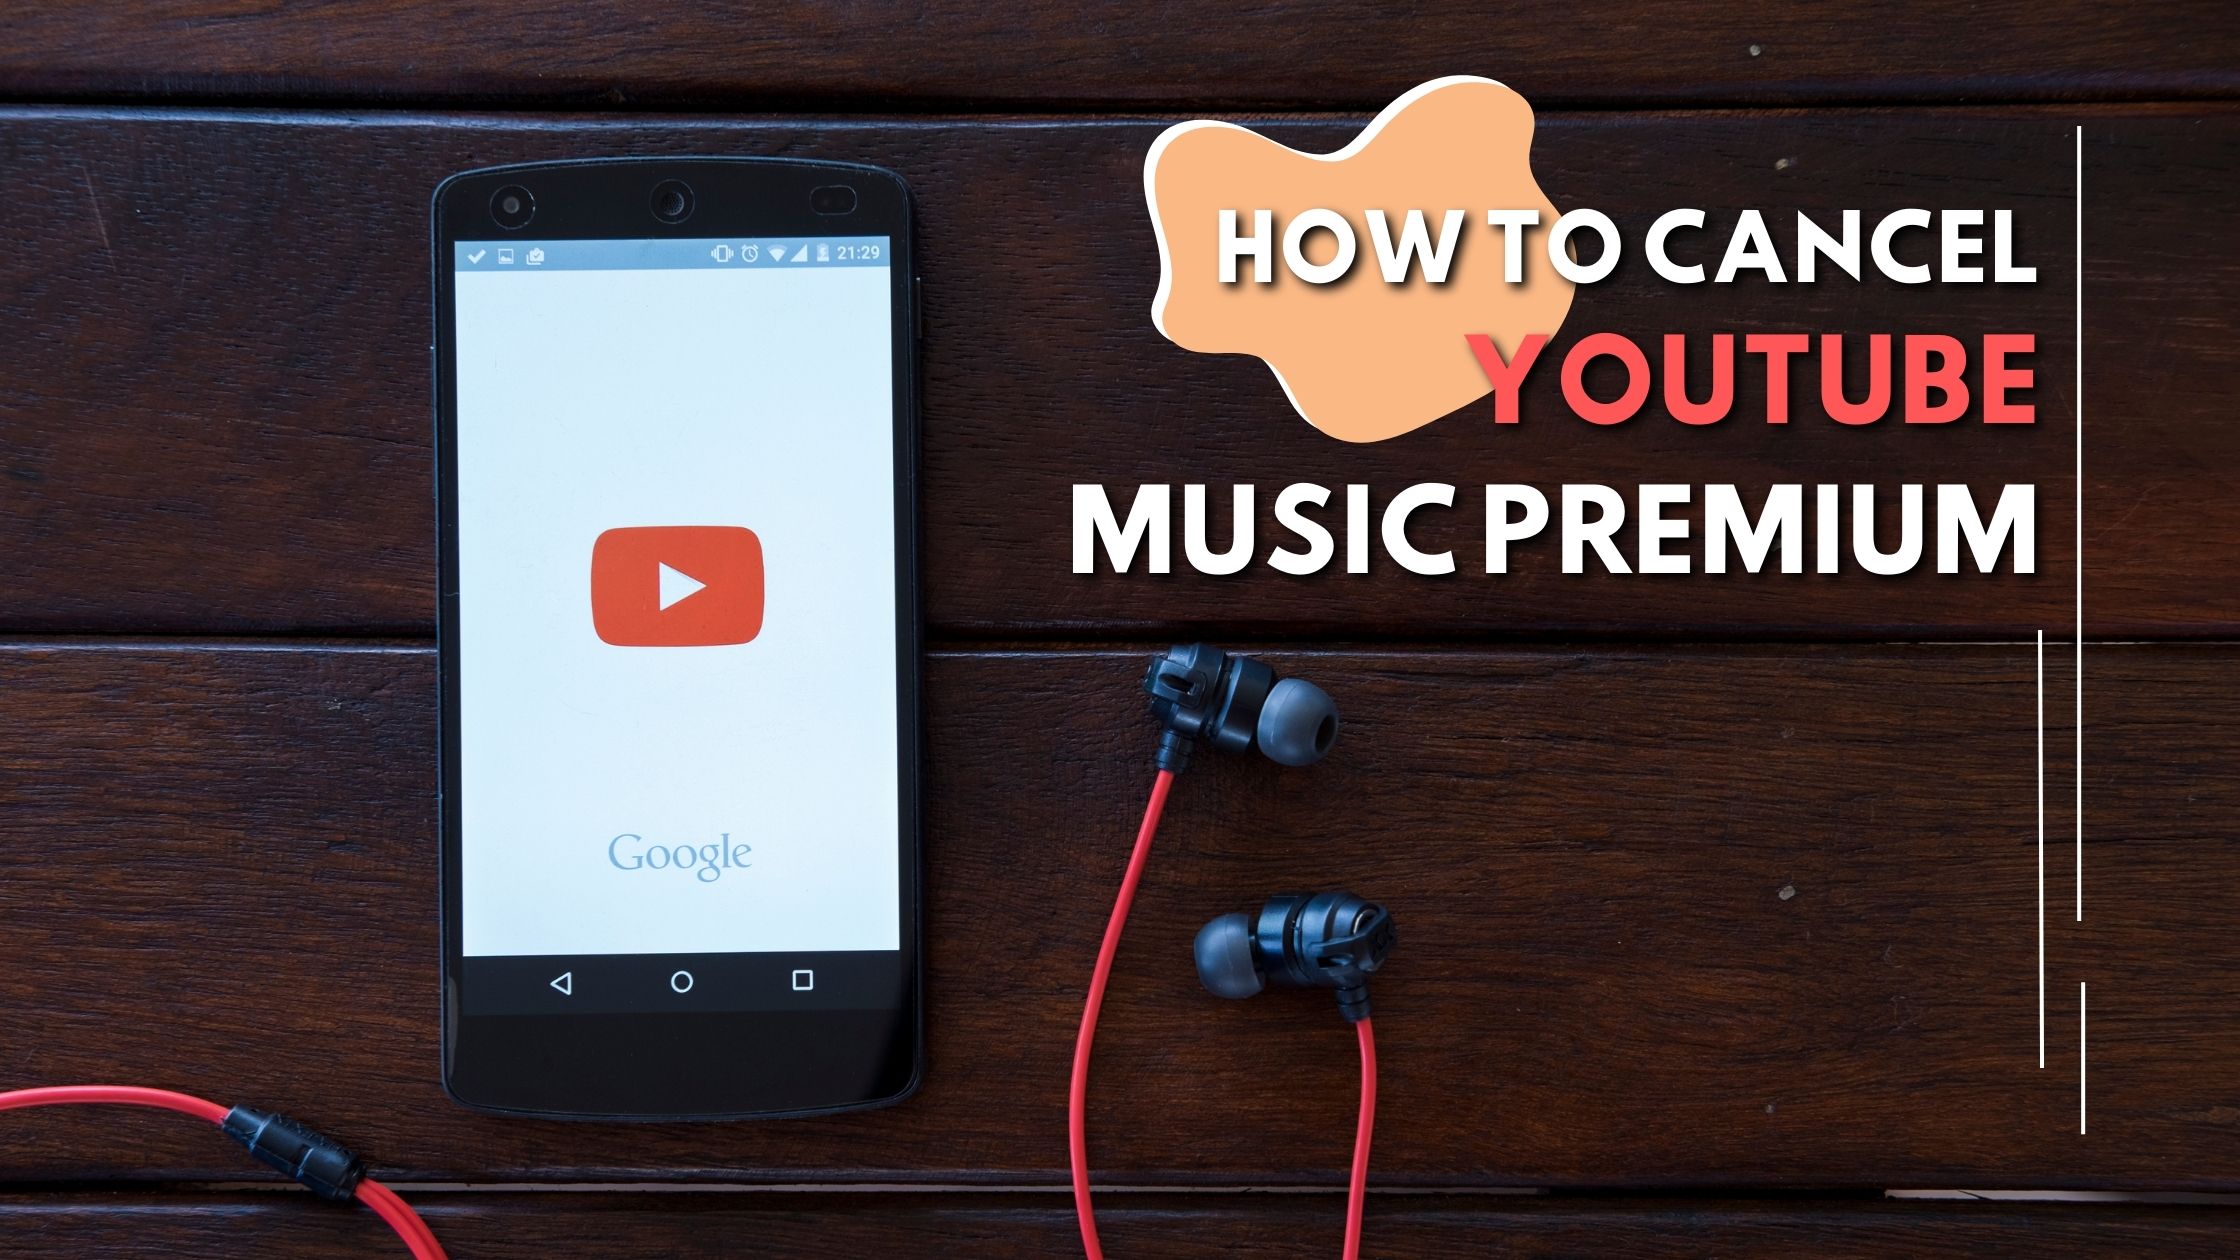 How to Cancel YouTube Music Premium